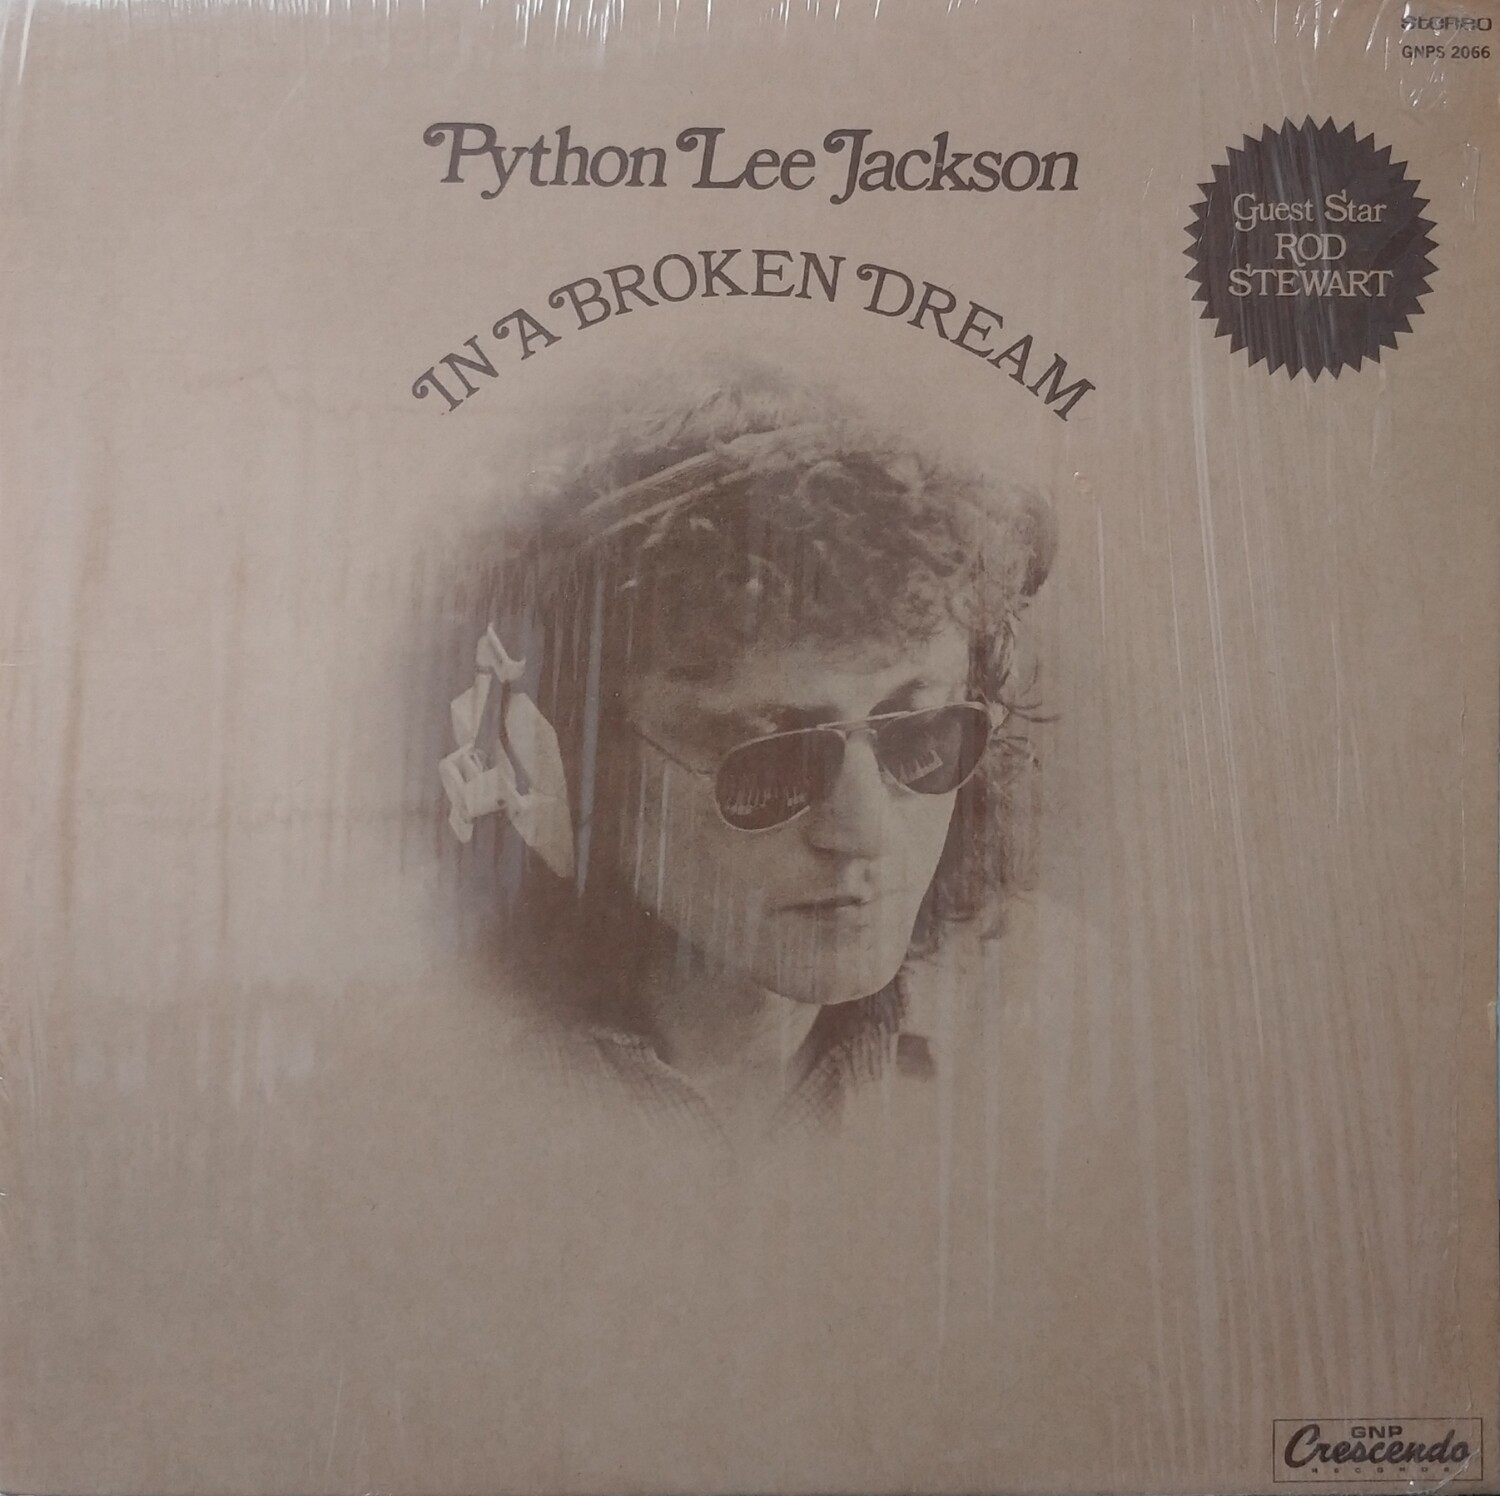 Python Lee Jackson - In a broken dream